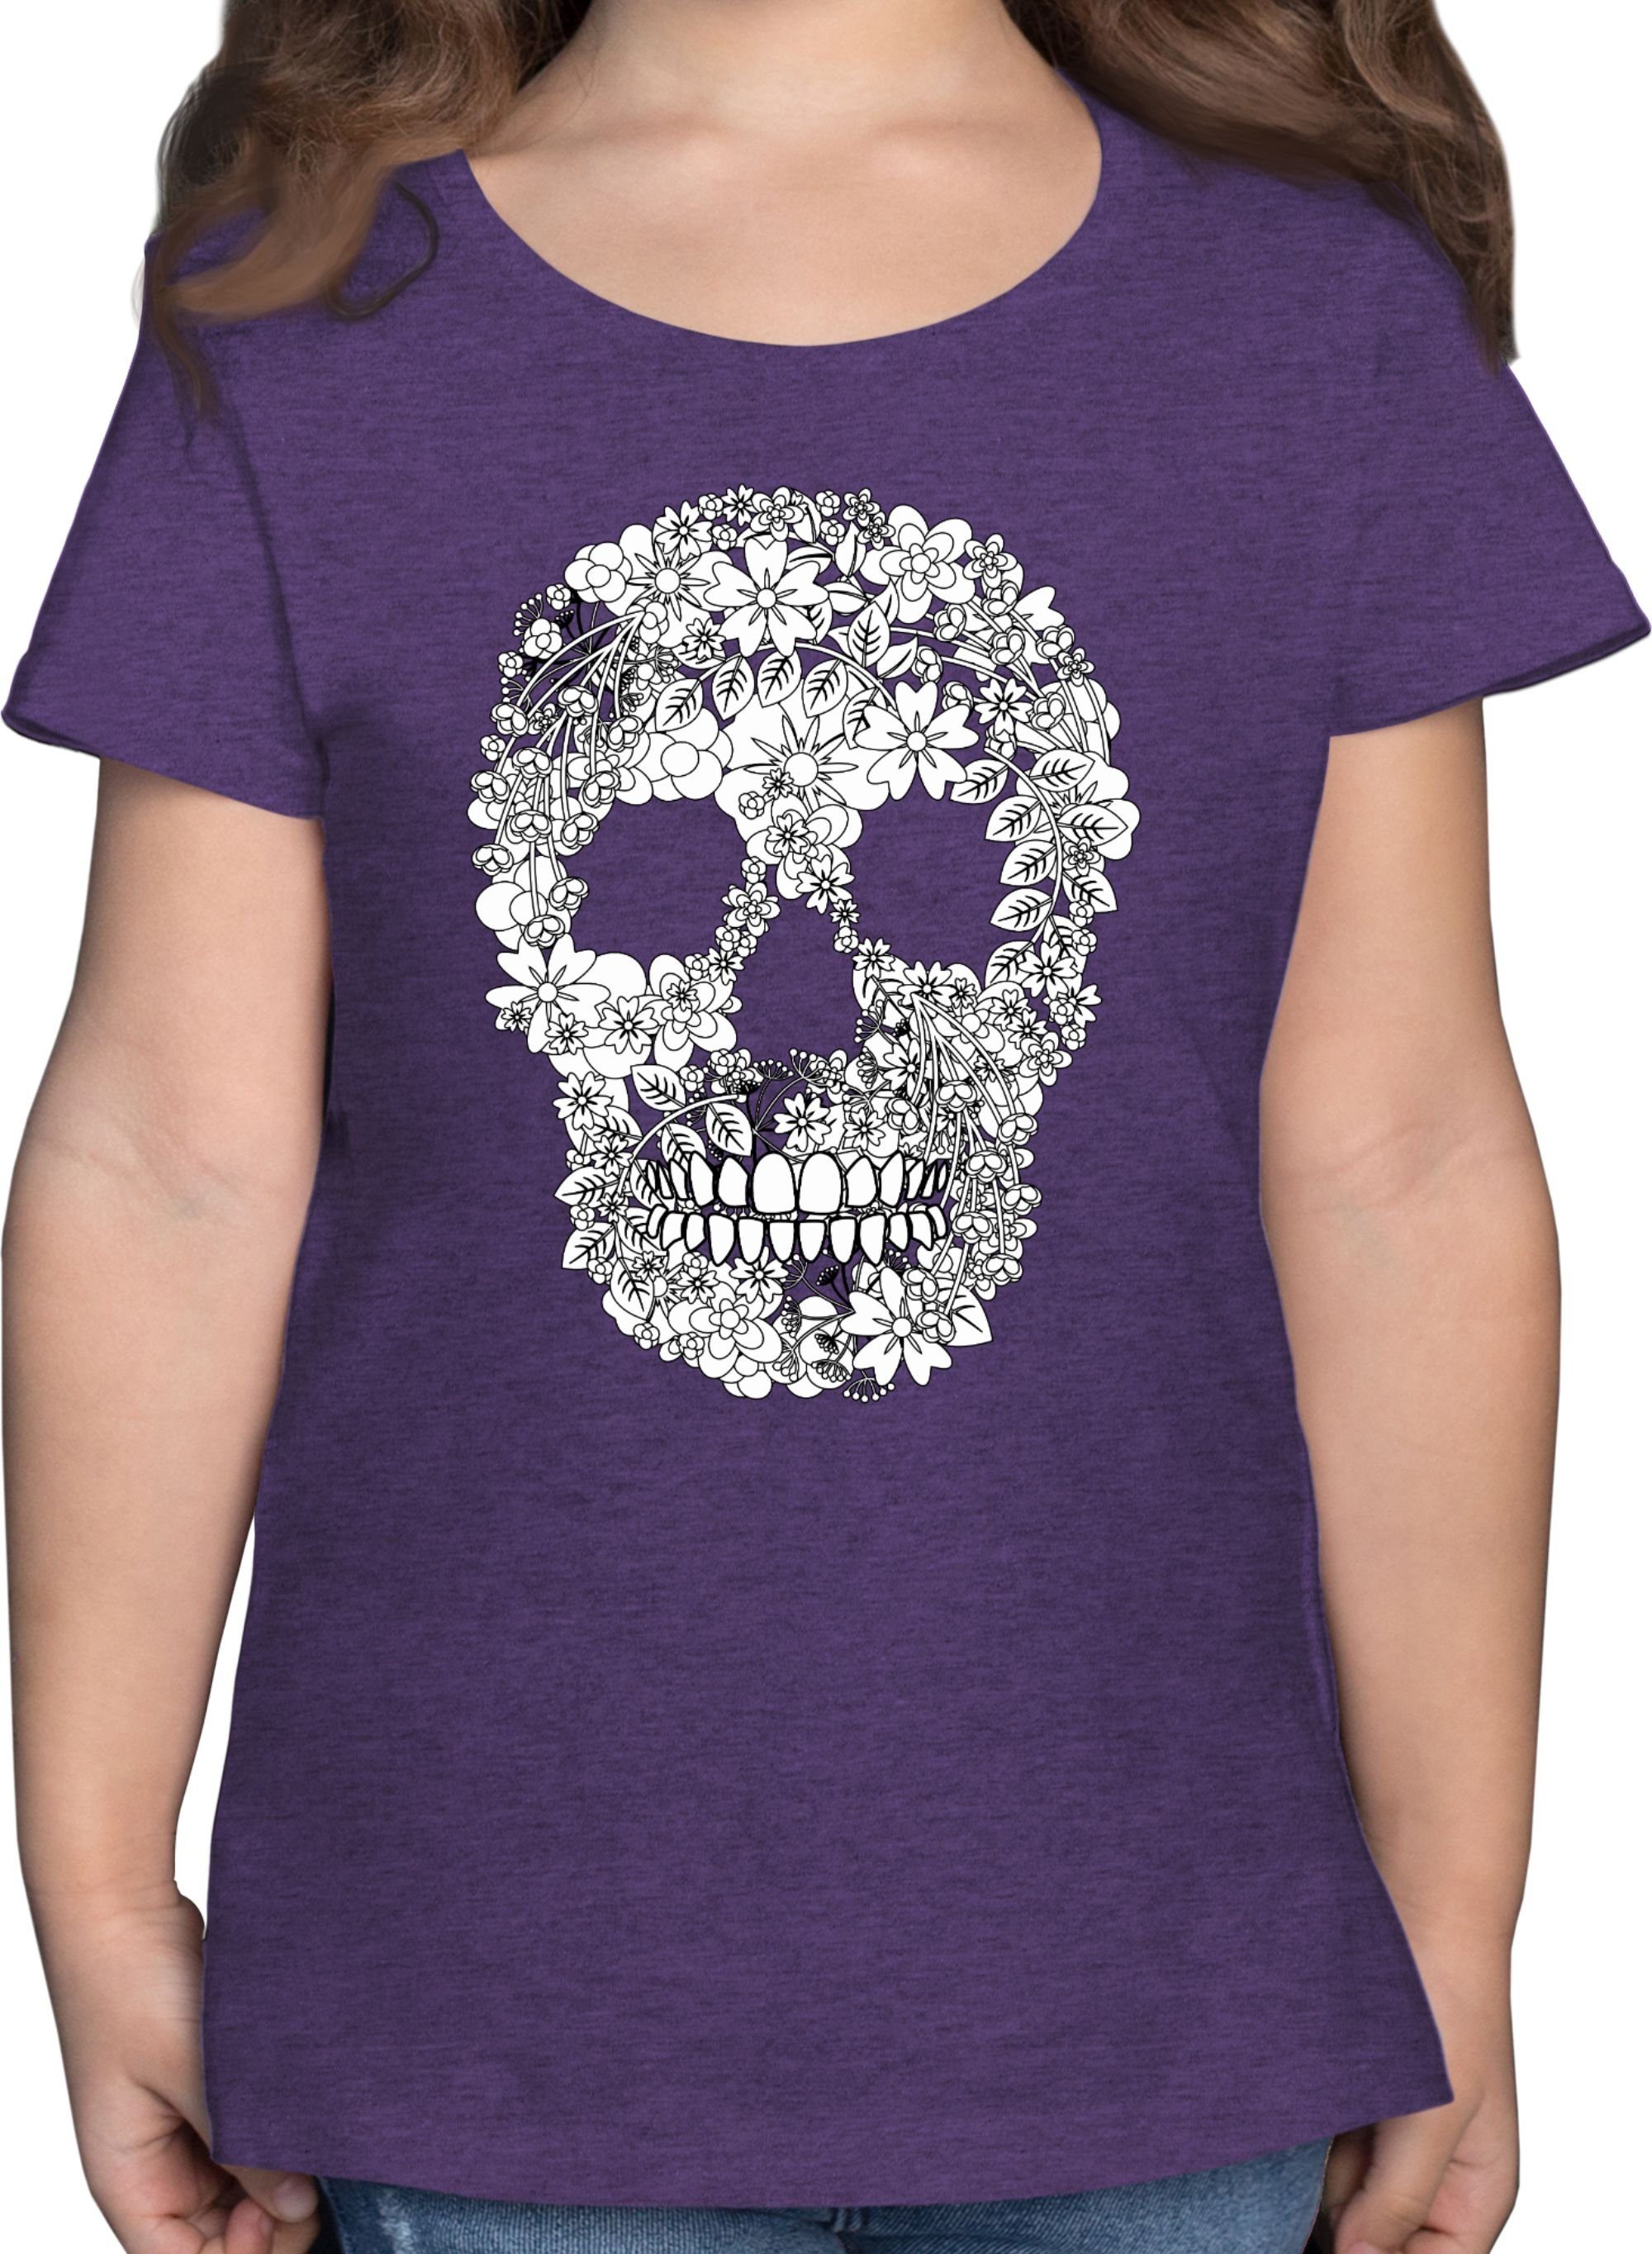 Meliert Lila 2 Kindermotive Flowers Skull Shirtracer Totenkopf Blumen T-Shirt